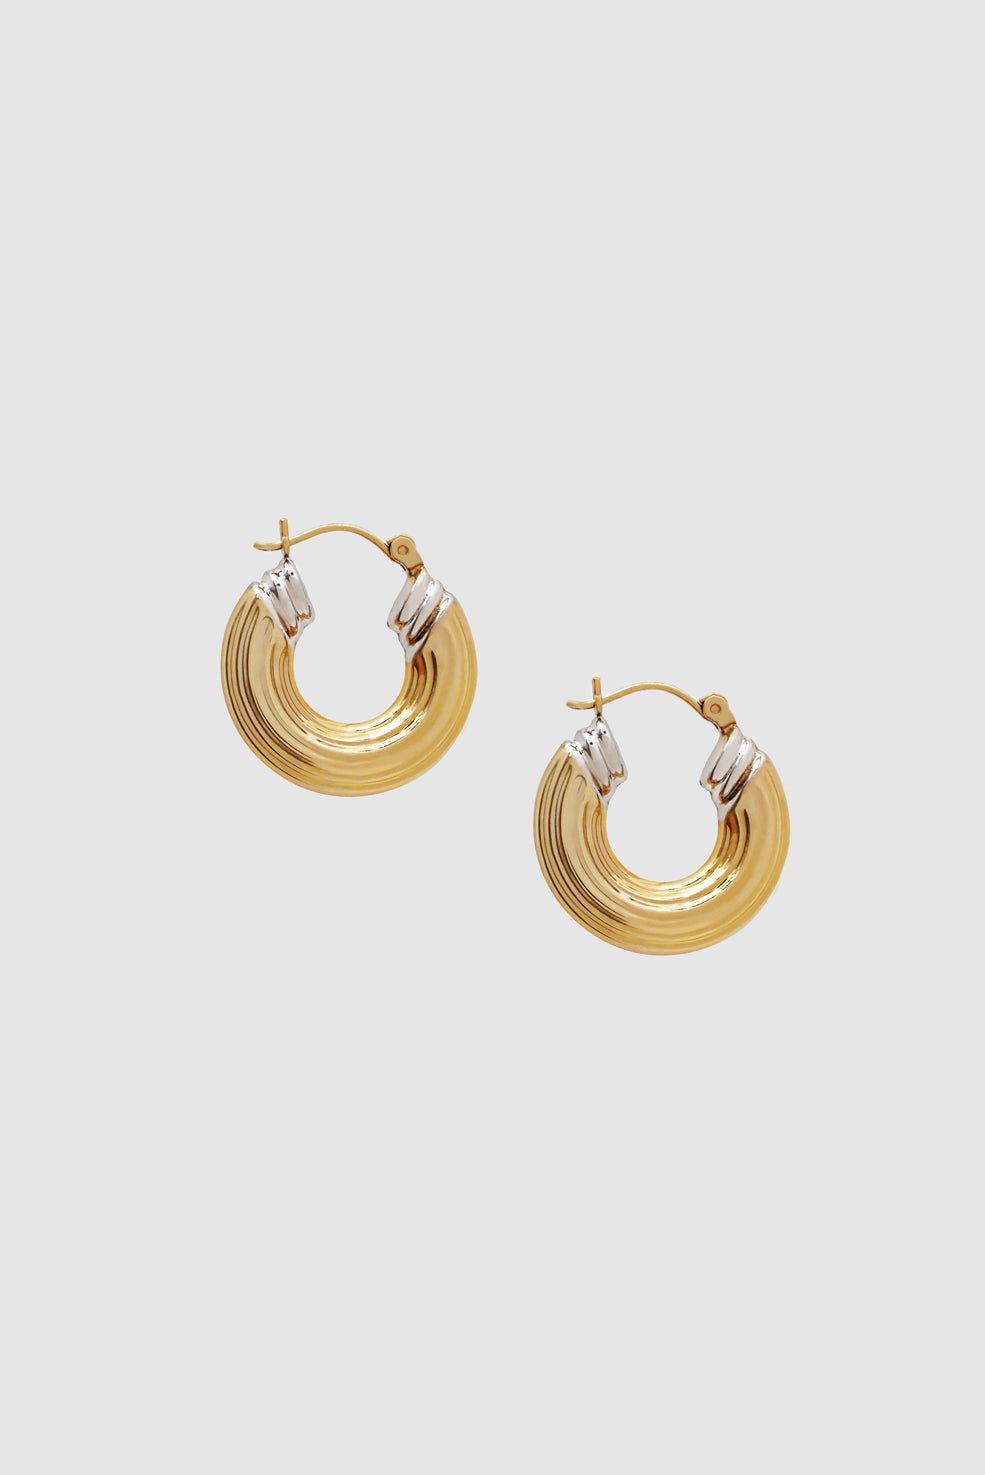  42 Pairs Gold Hoop Earrings Set for Women, Fashion